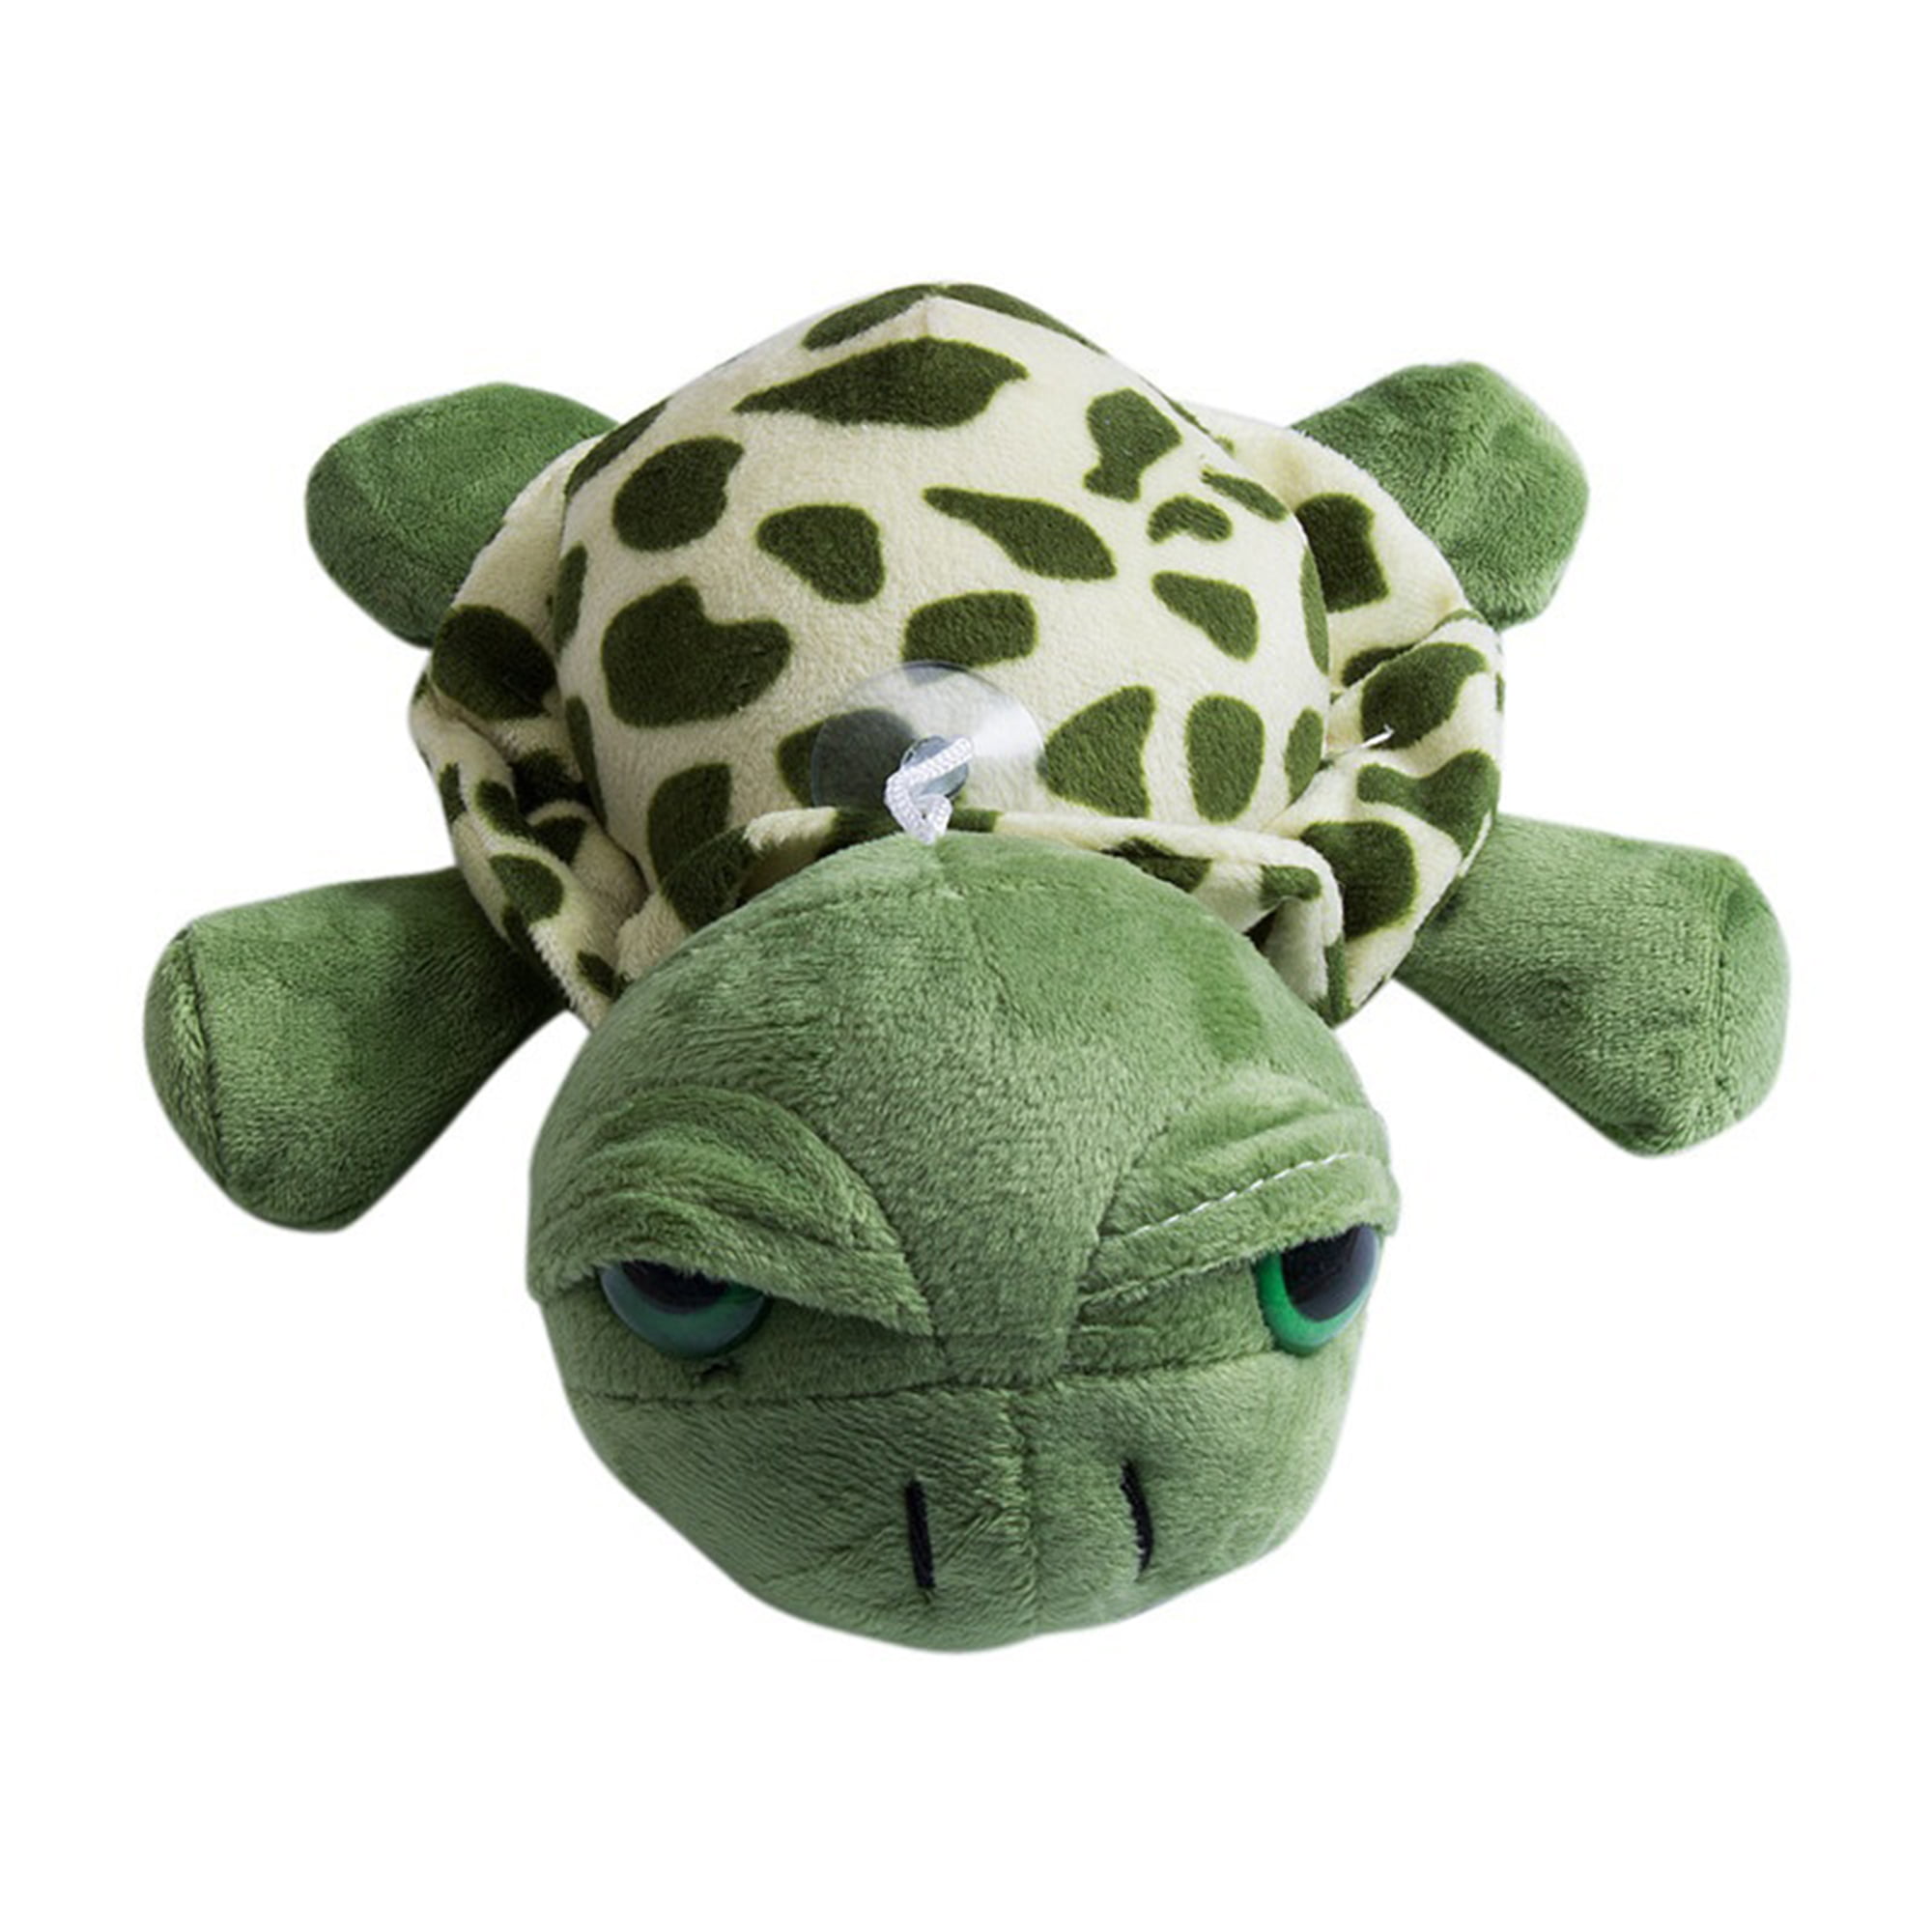 7" Big Eyes Green Turtle Tortoise Animal Baby Kids Stuffed Plush super cute gift 